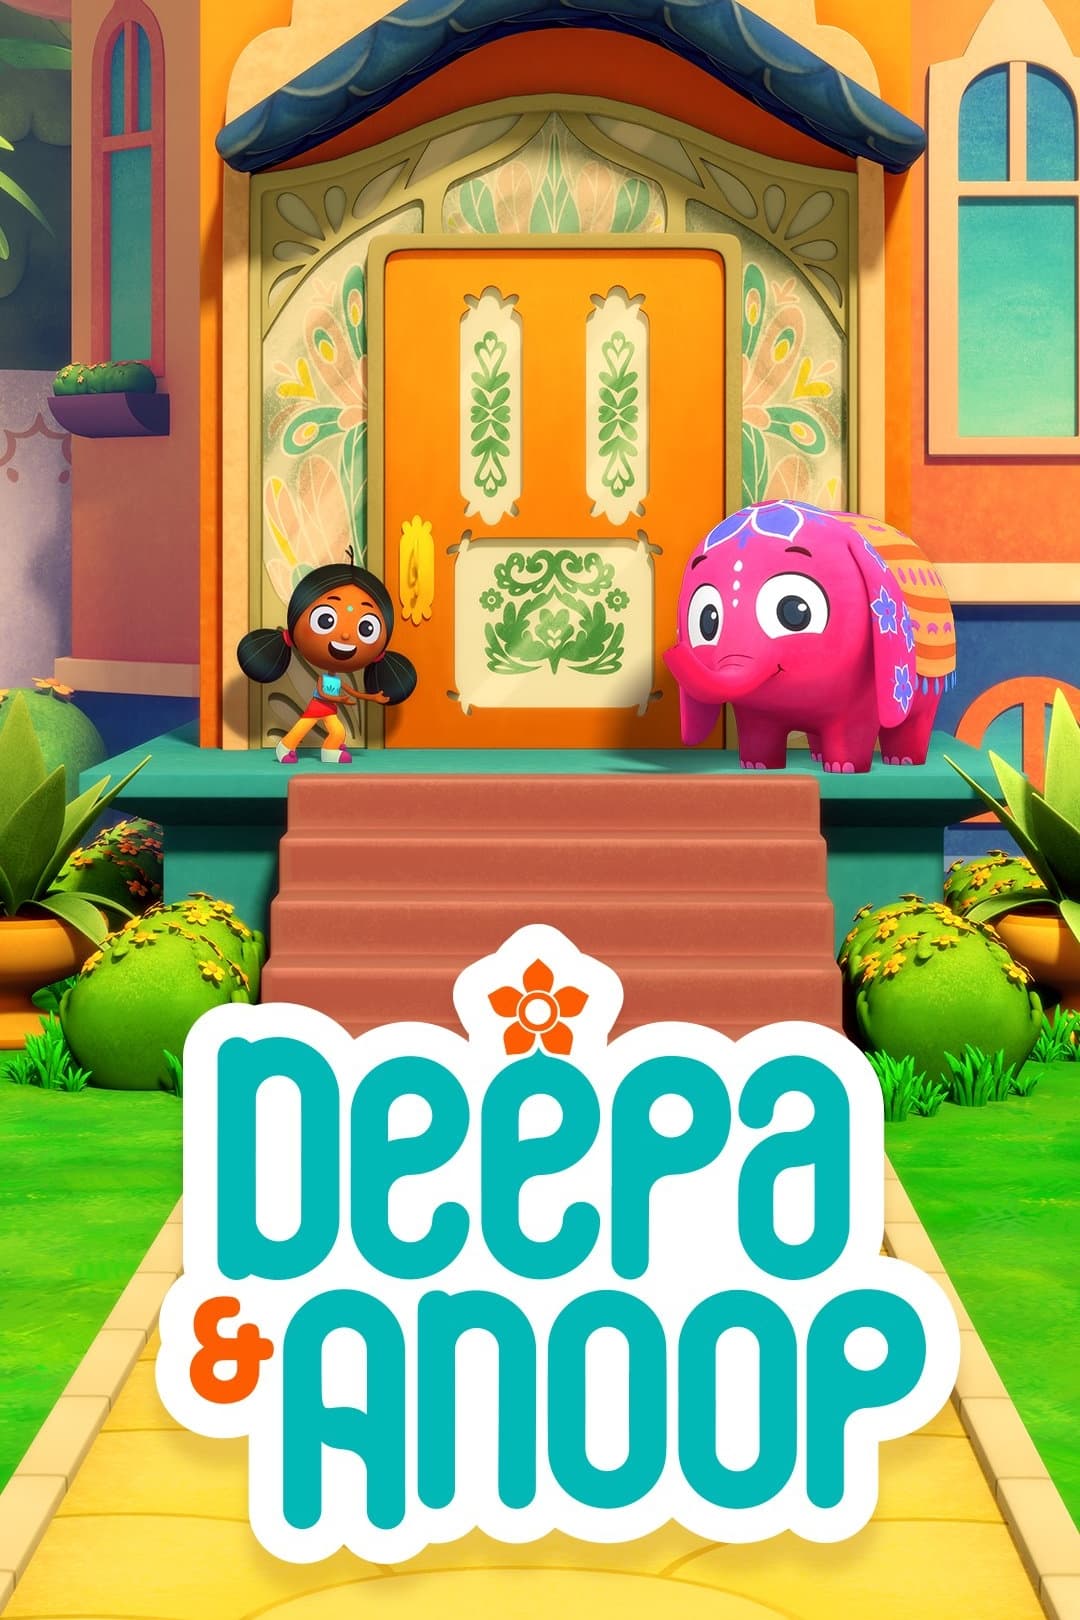 Deepa & Anoop TV Shows About Ship